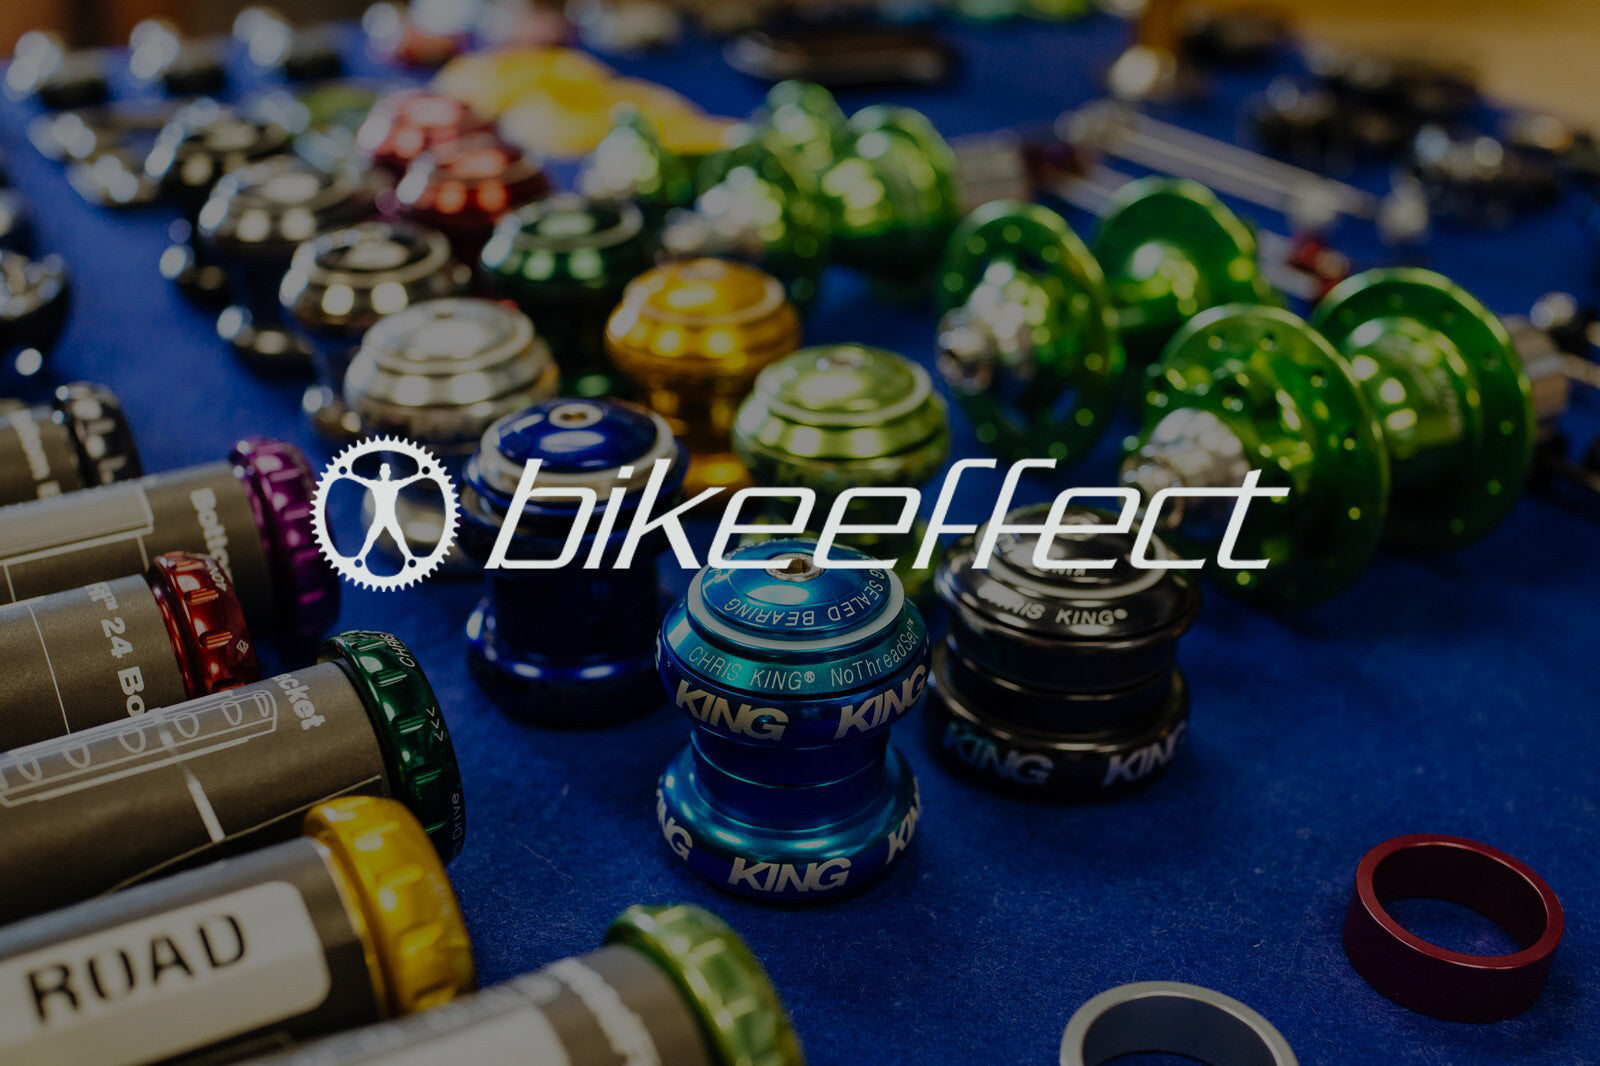 Meet Bike Effect